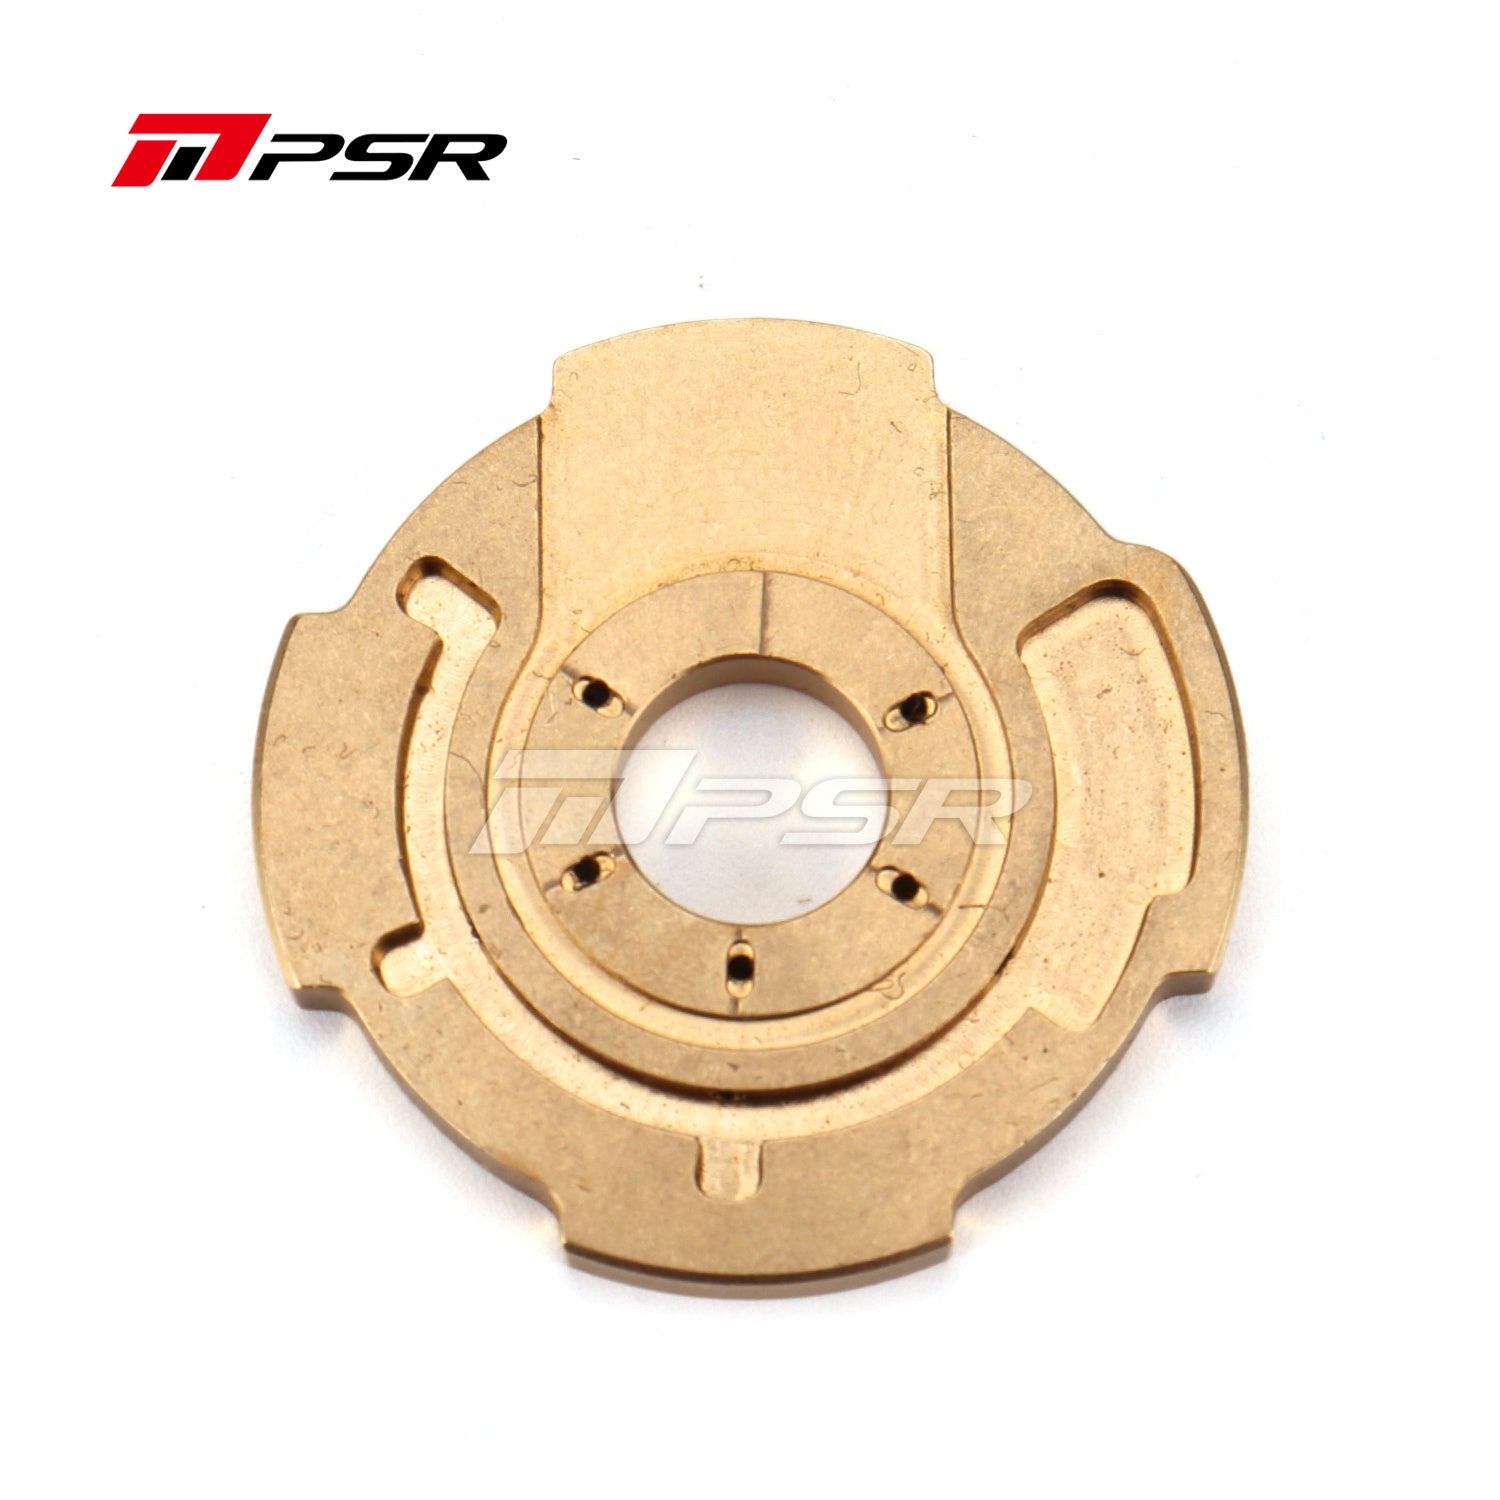 PSR Turbo Parts for GTP38 Turbo Charger Billet Compressor Wheel Rebuil